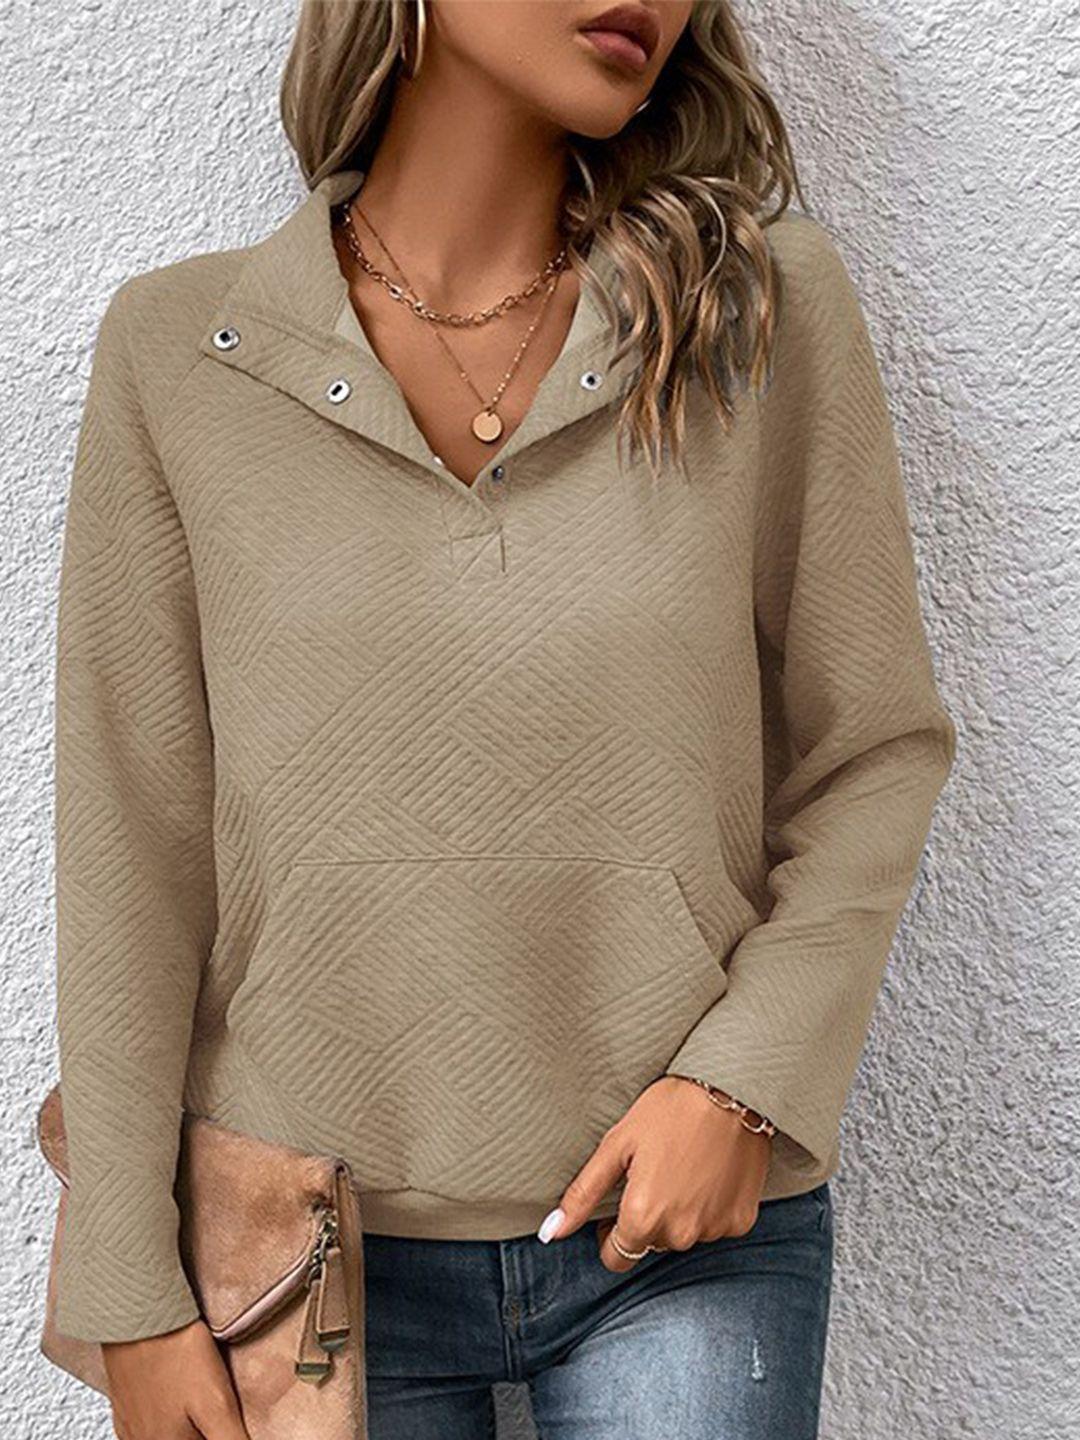 stylecast women khaki sweatshirt